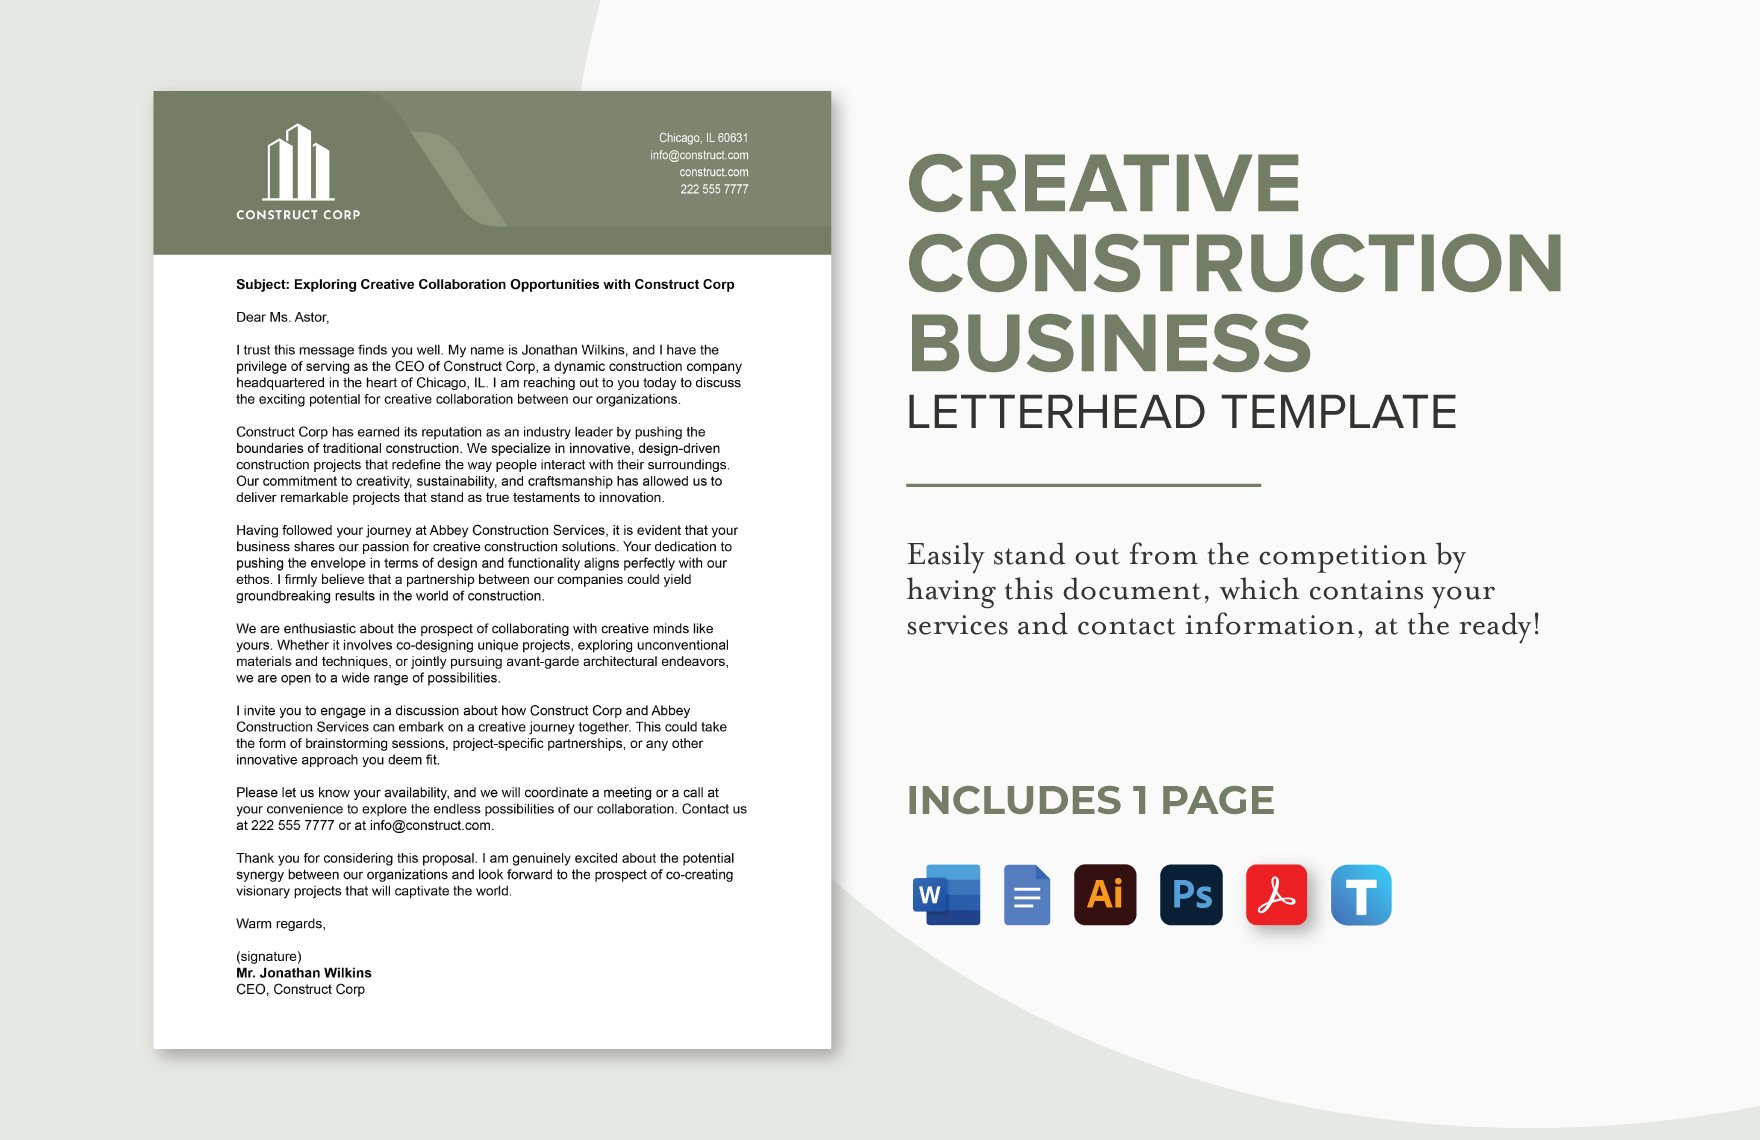 Creative Construction Business Letterhead Template